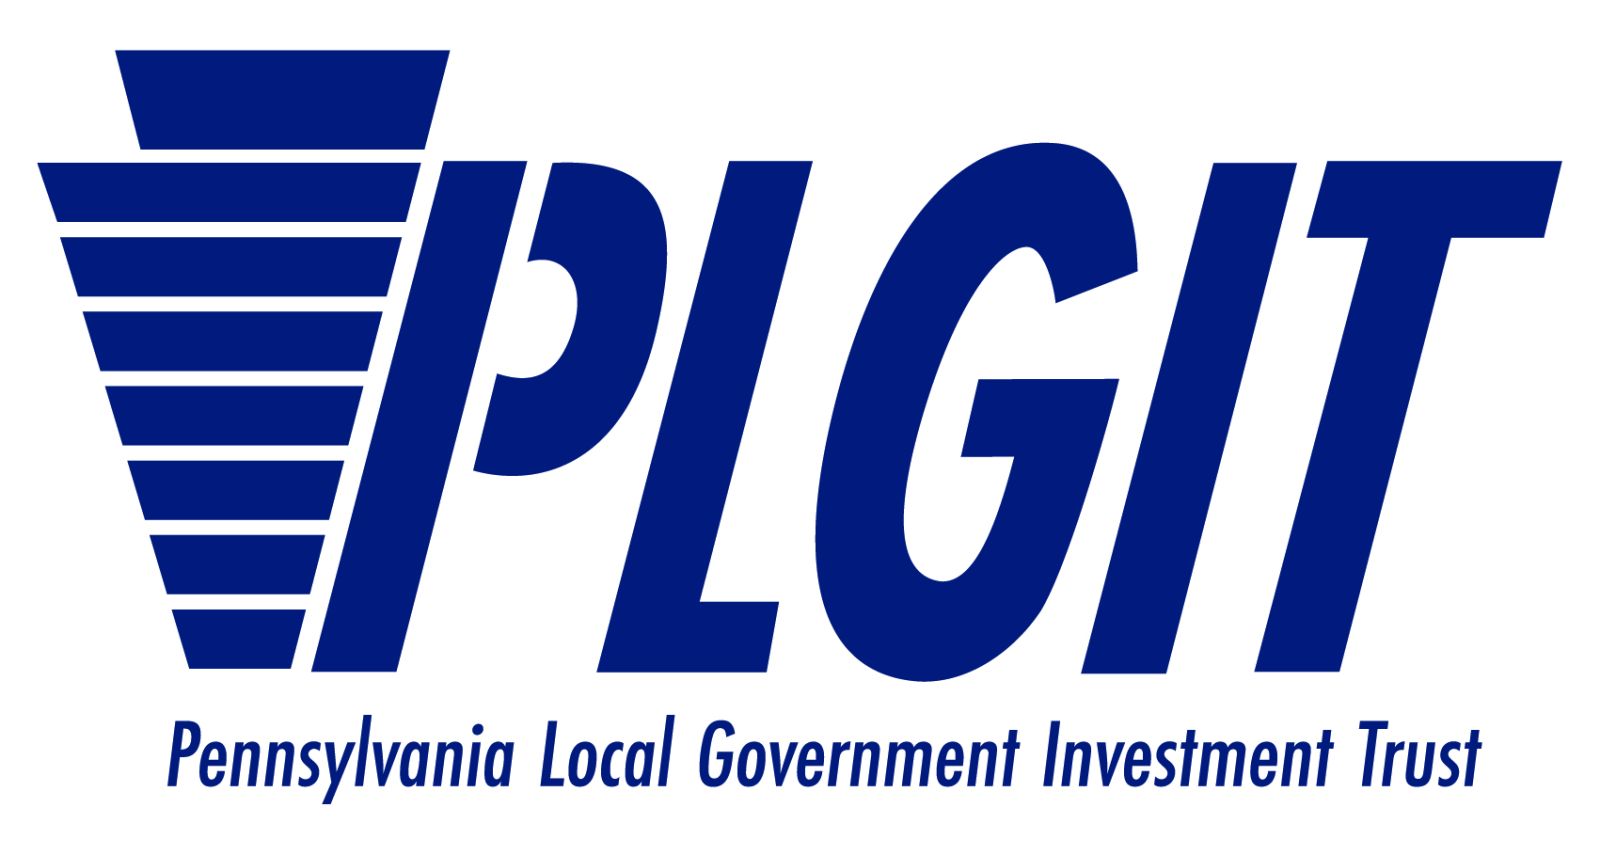 PLGIT blue logo